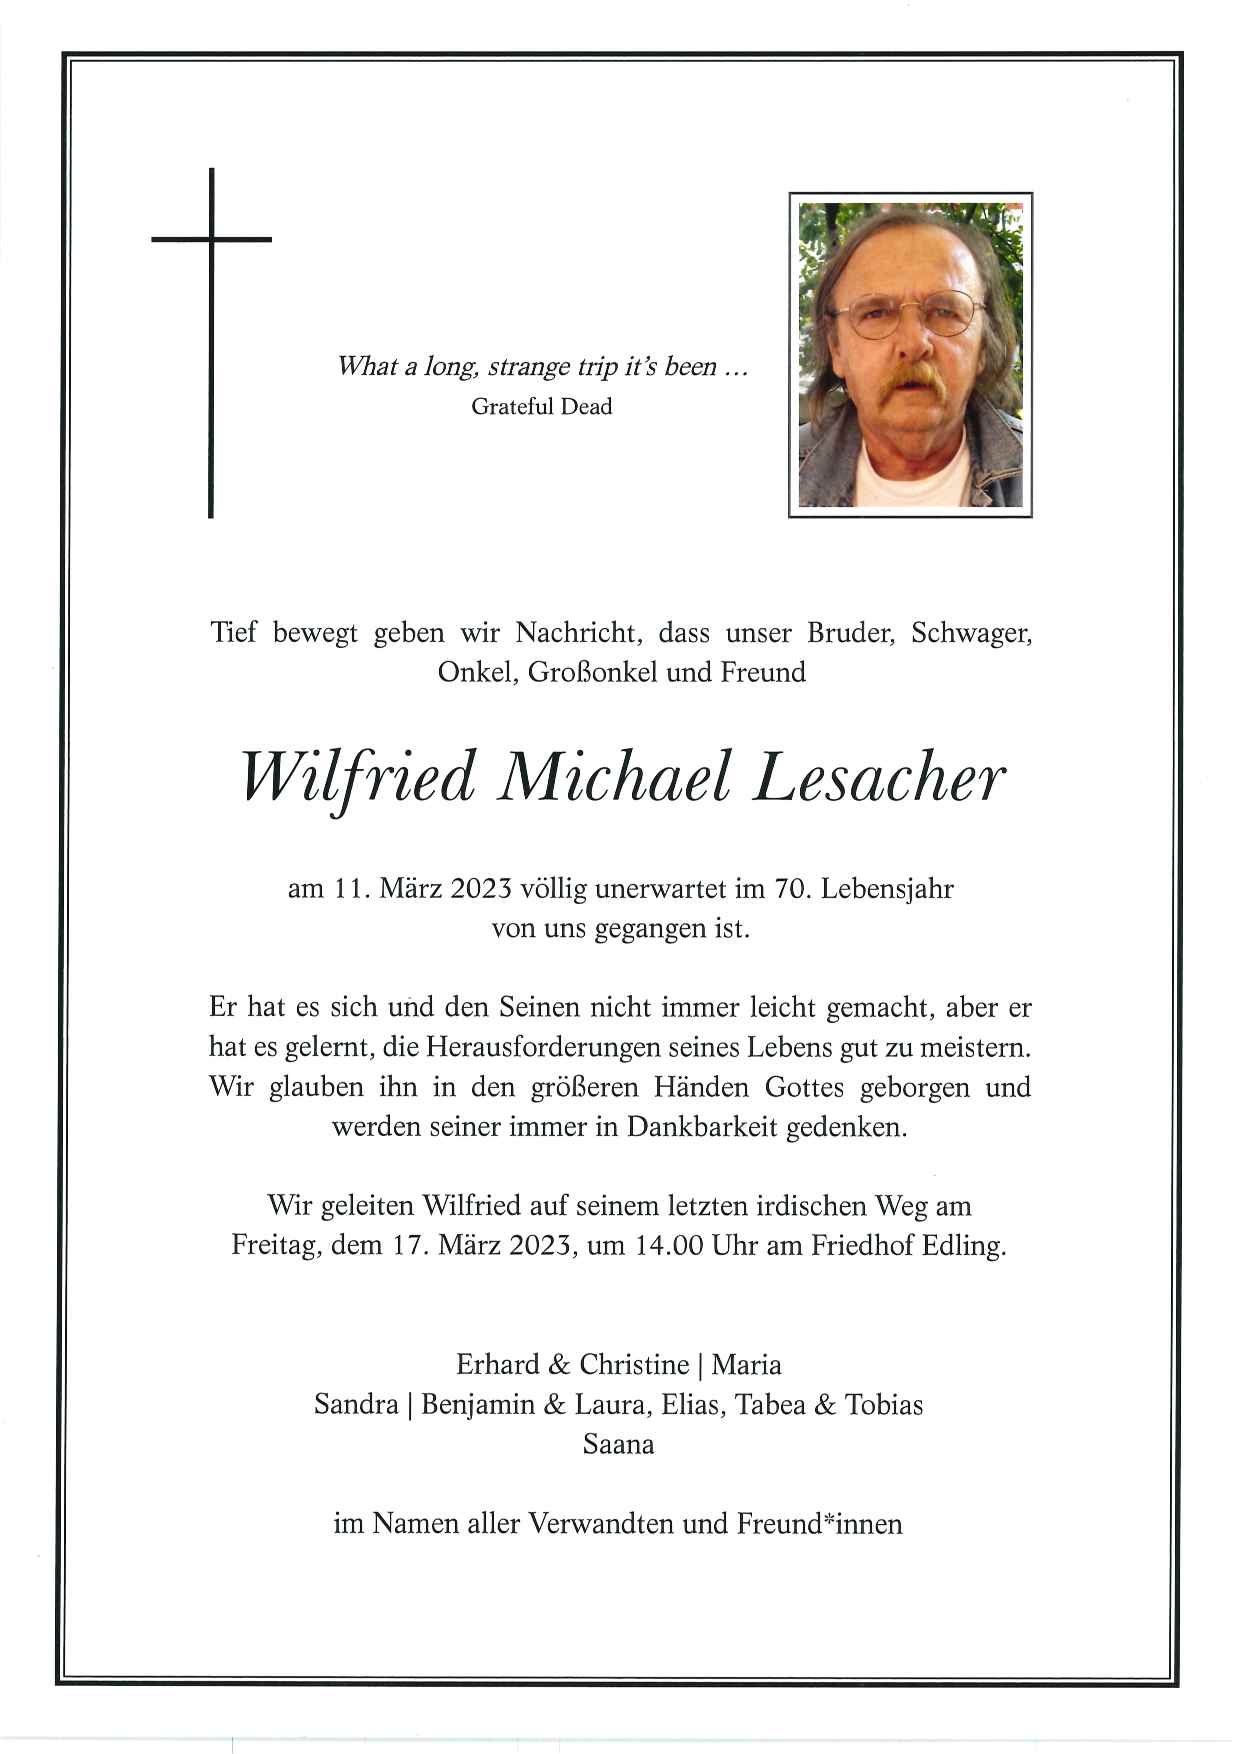 Wilfried Michael Lesacher